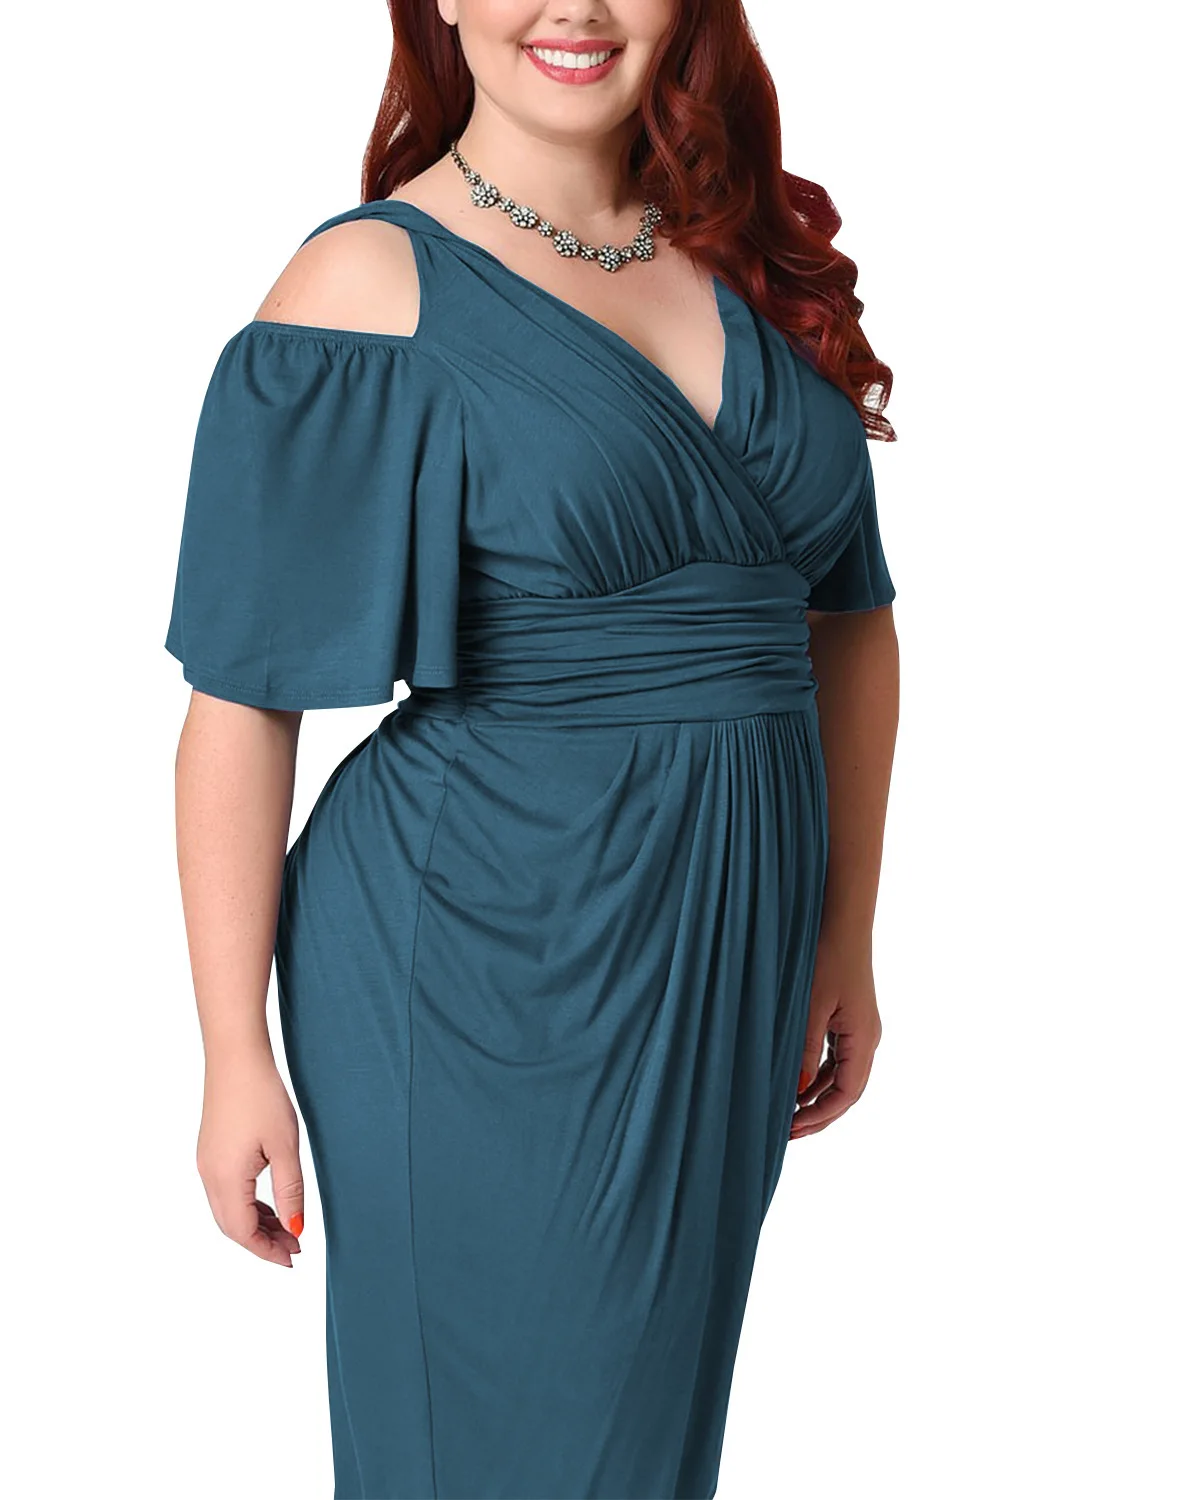 Summer Sexy Midi Dress For Fat Women Plus Size Vintage 4XL 5XL V Neck - plus-size-dresses